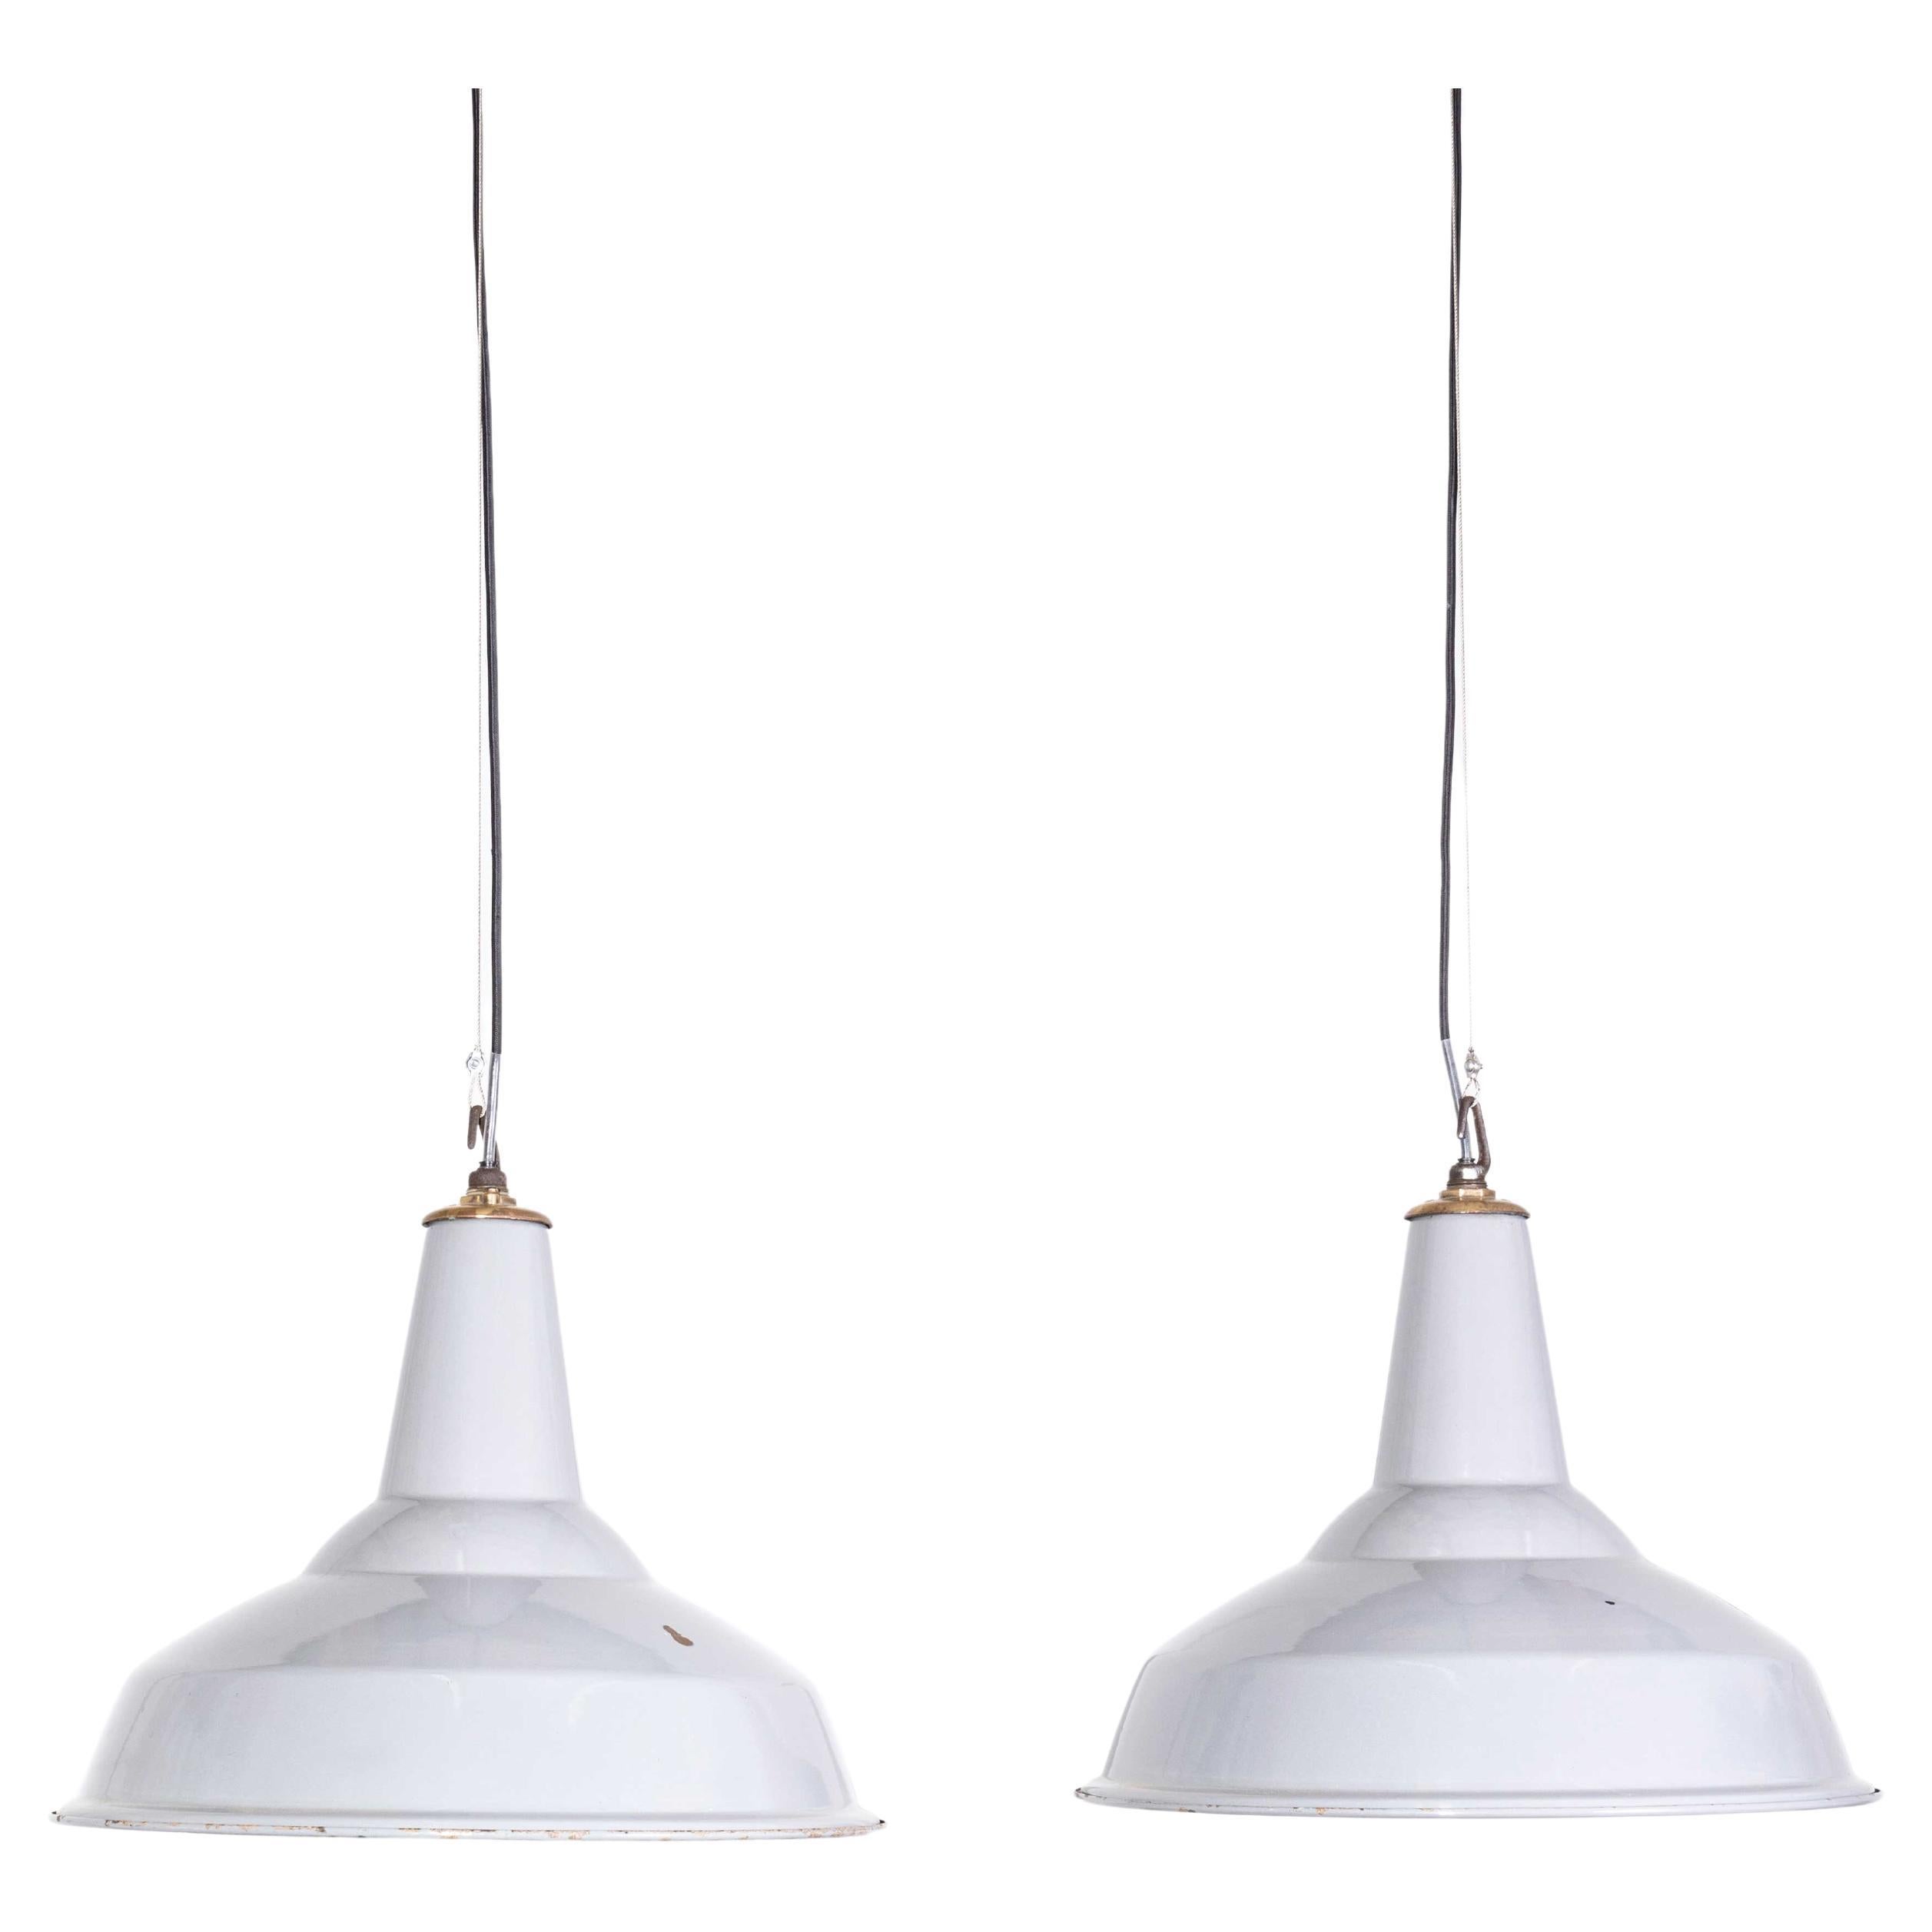 1950's Industrial Benjamin Enamelled Pendant Lamps 16 Inch - Pair For Sale